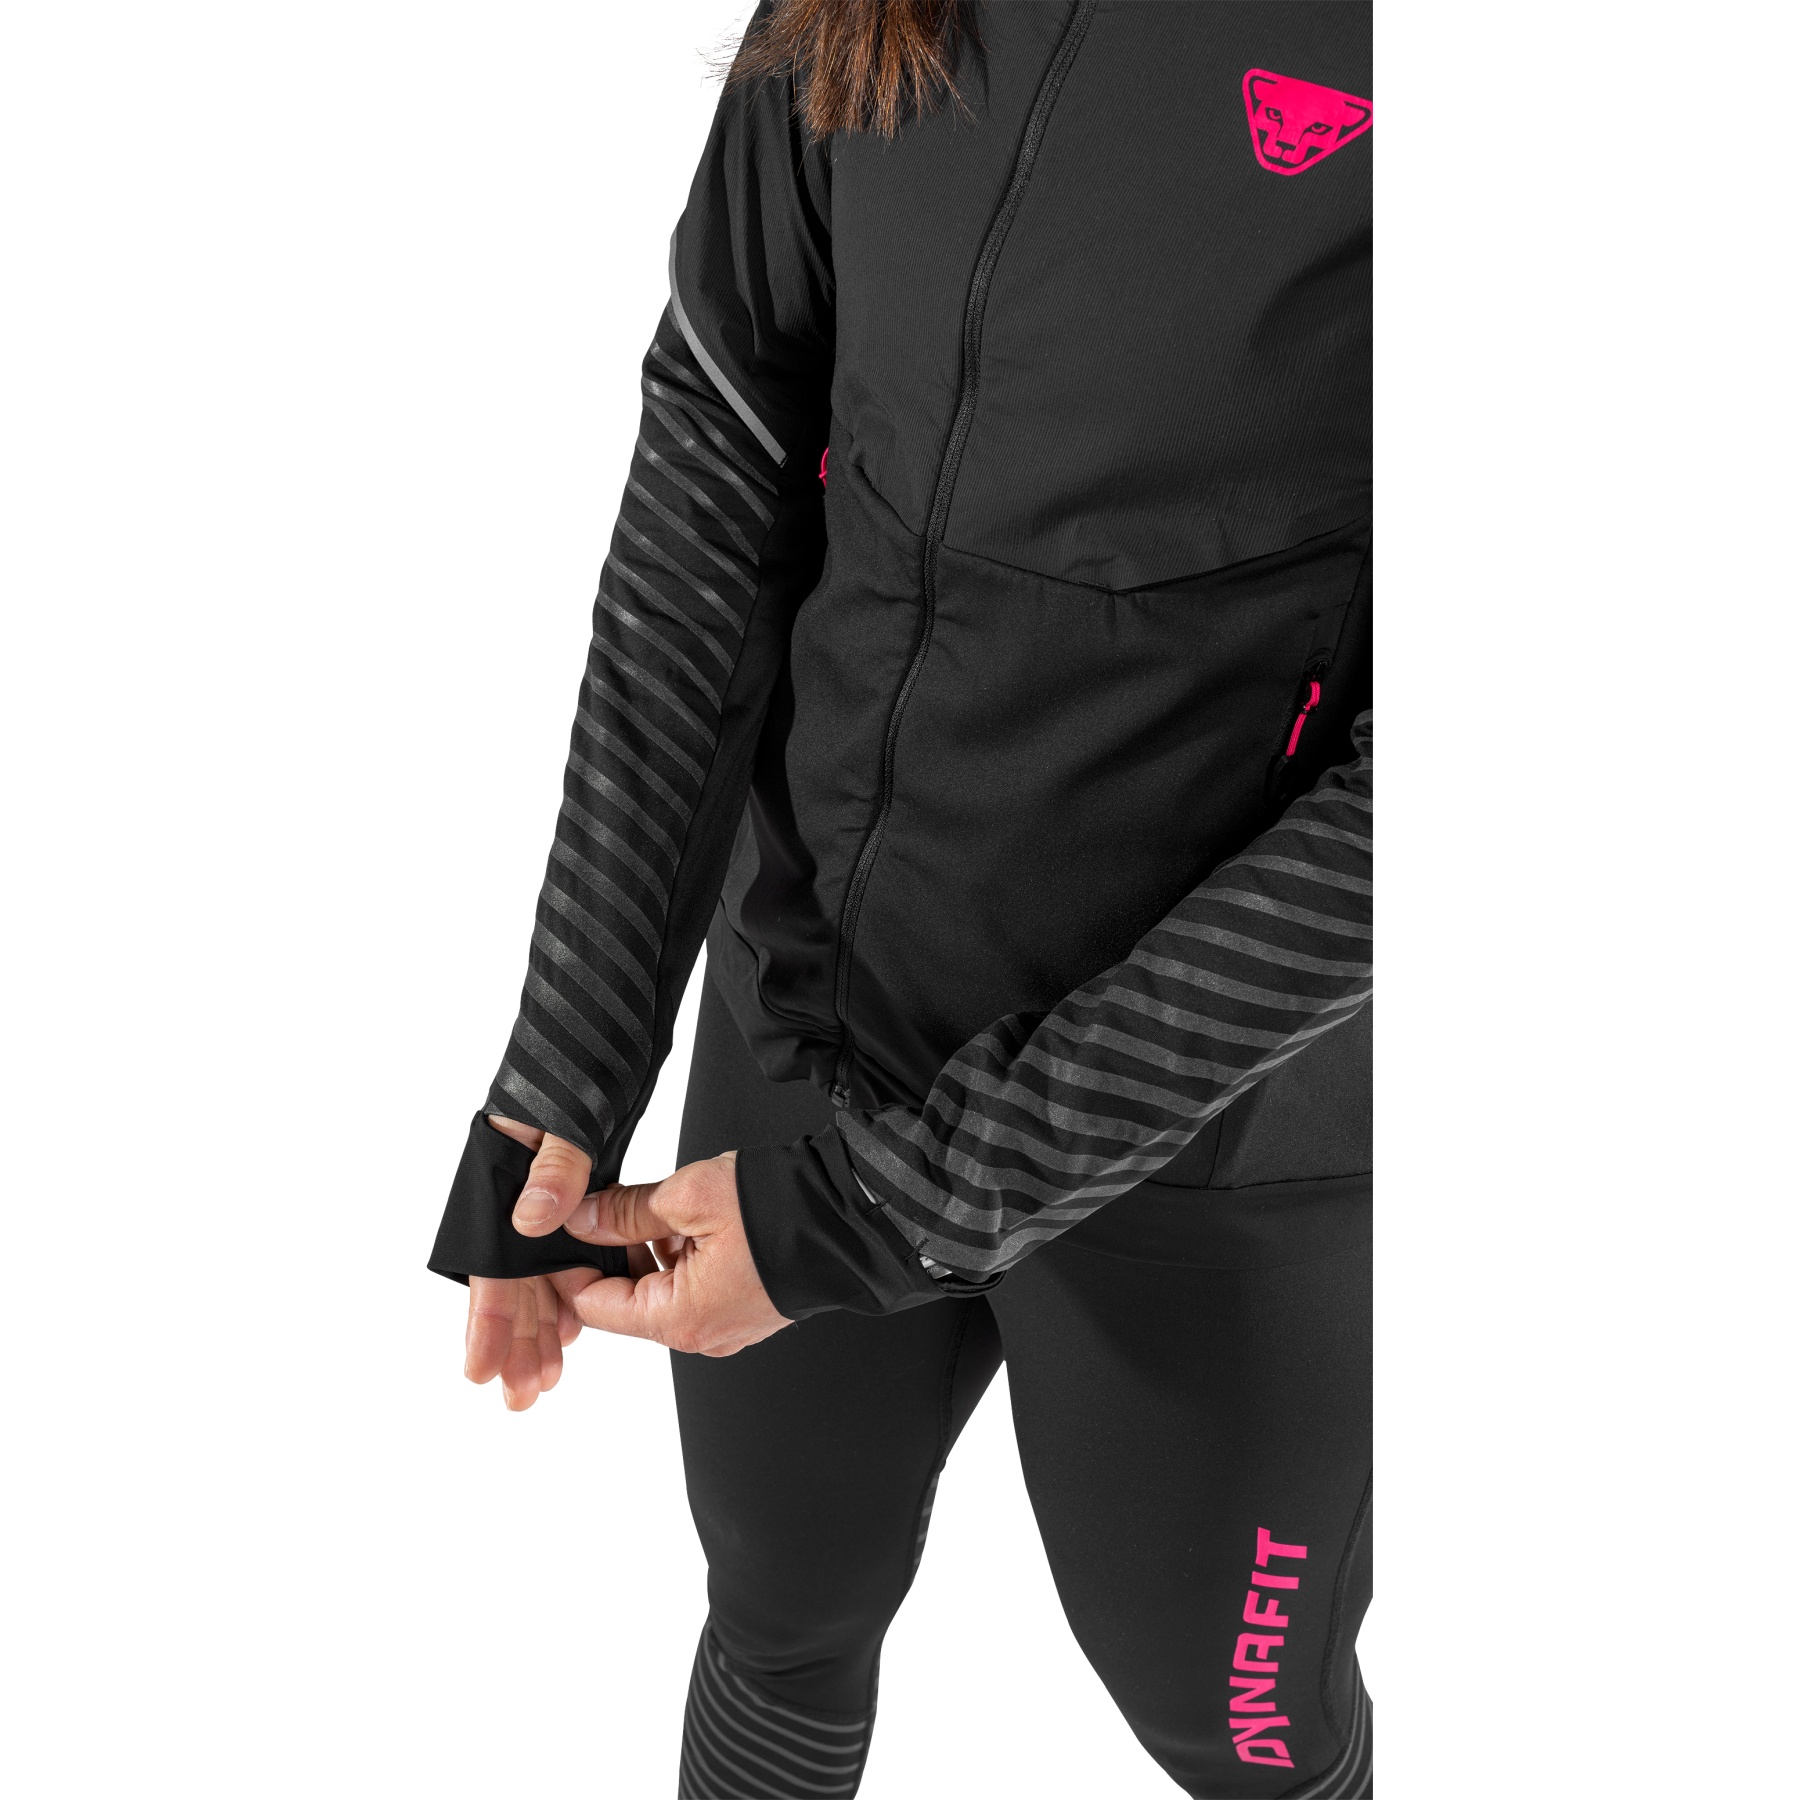 Dynafit Alpine Reflective Jacket Women - Black Out Pink Glo